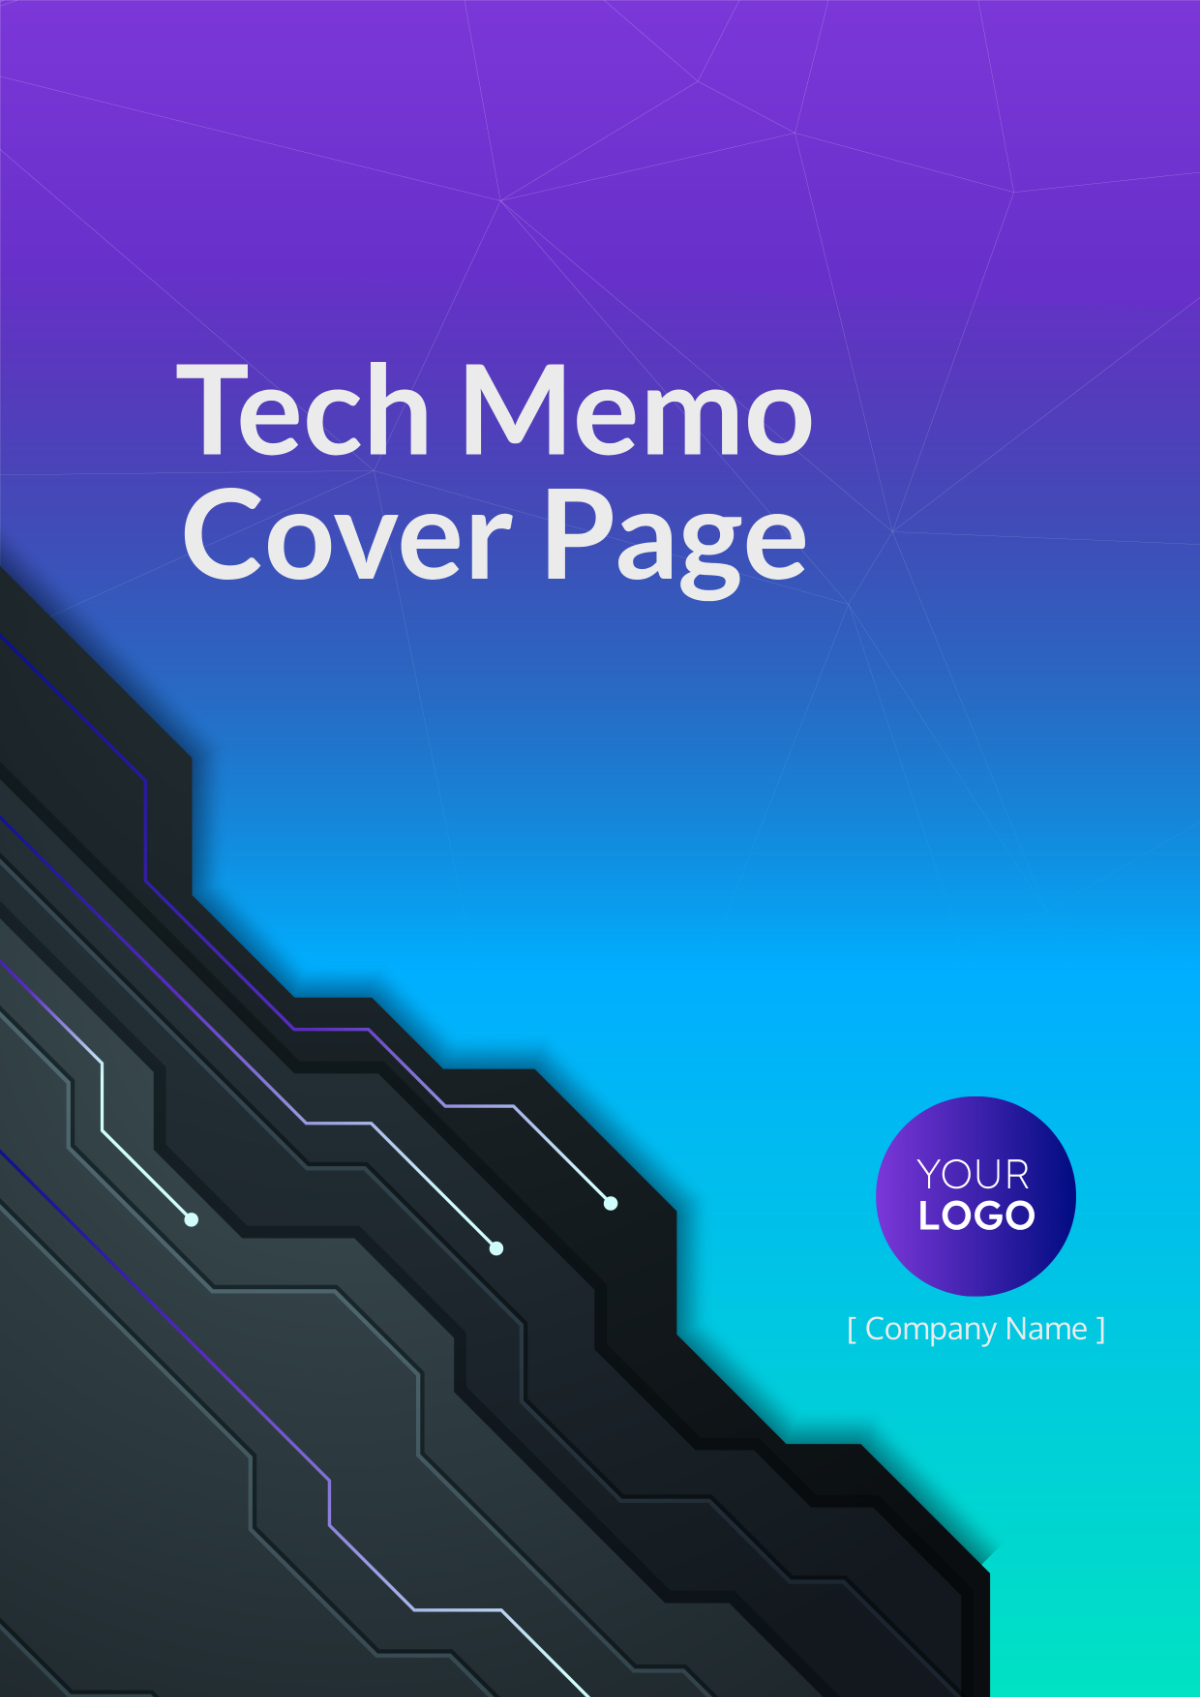 Tech Memo Cover Page Template